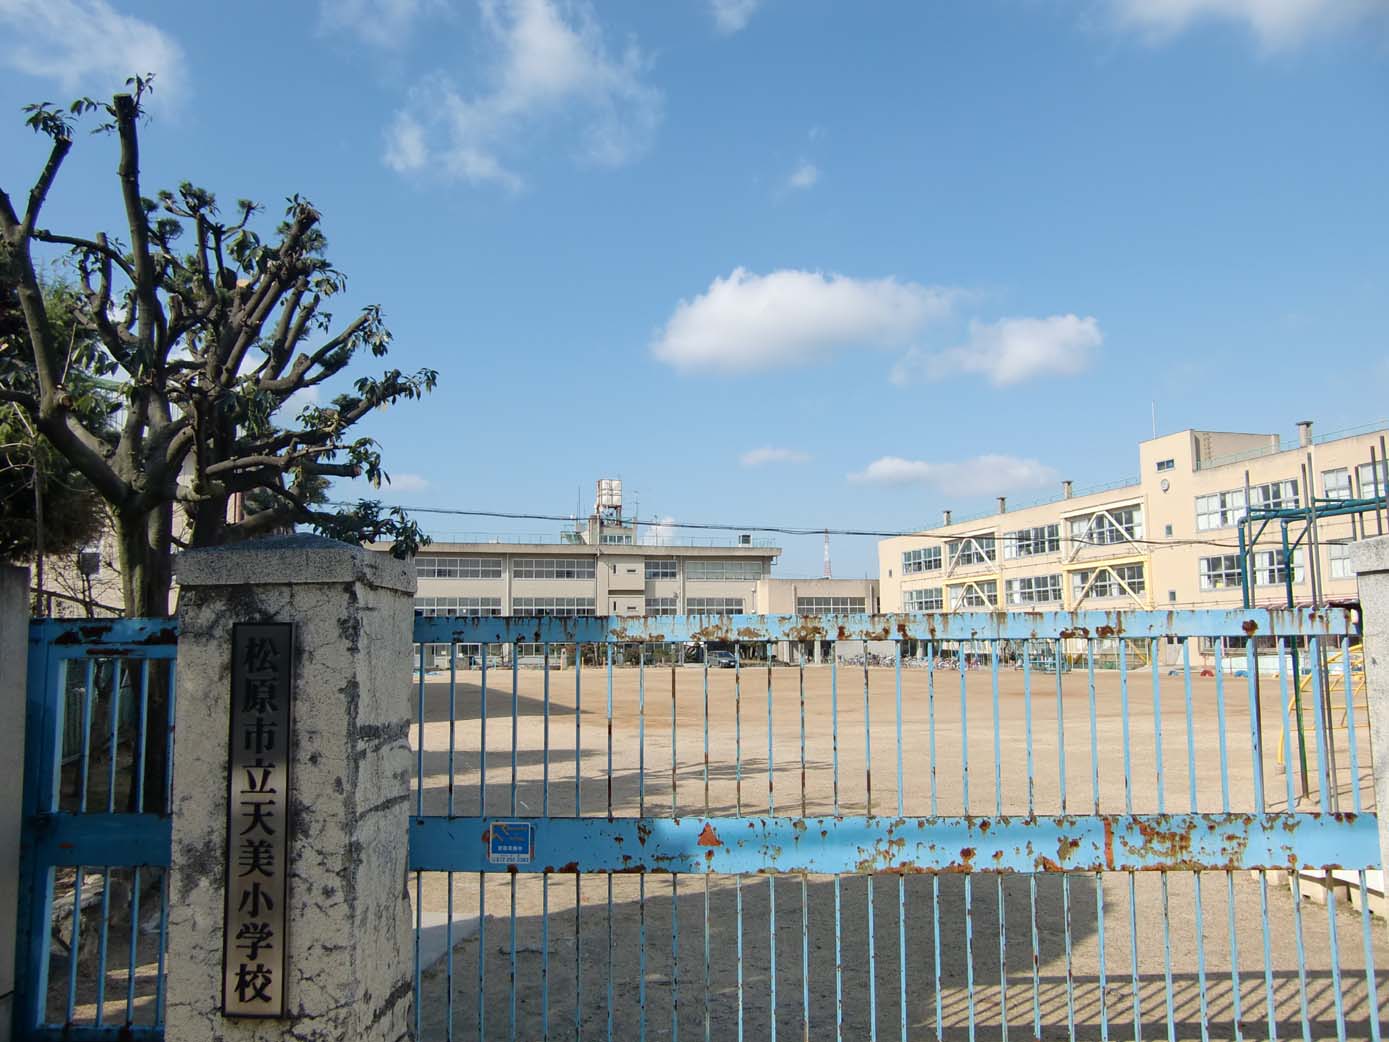 Primary school. Matsubara Municipal Amami up to elementary school (elementary school) 137m